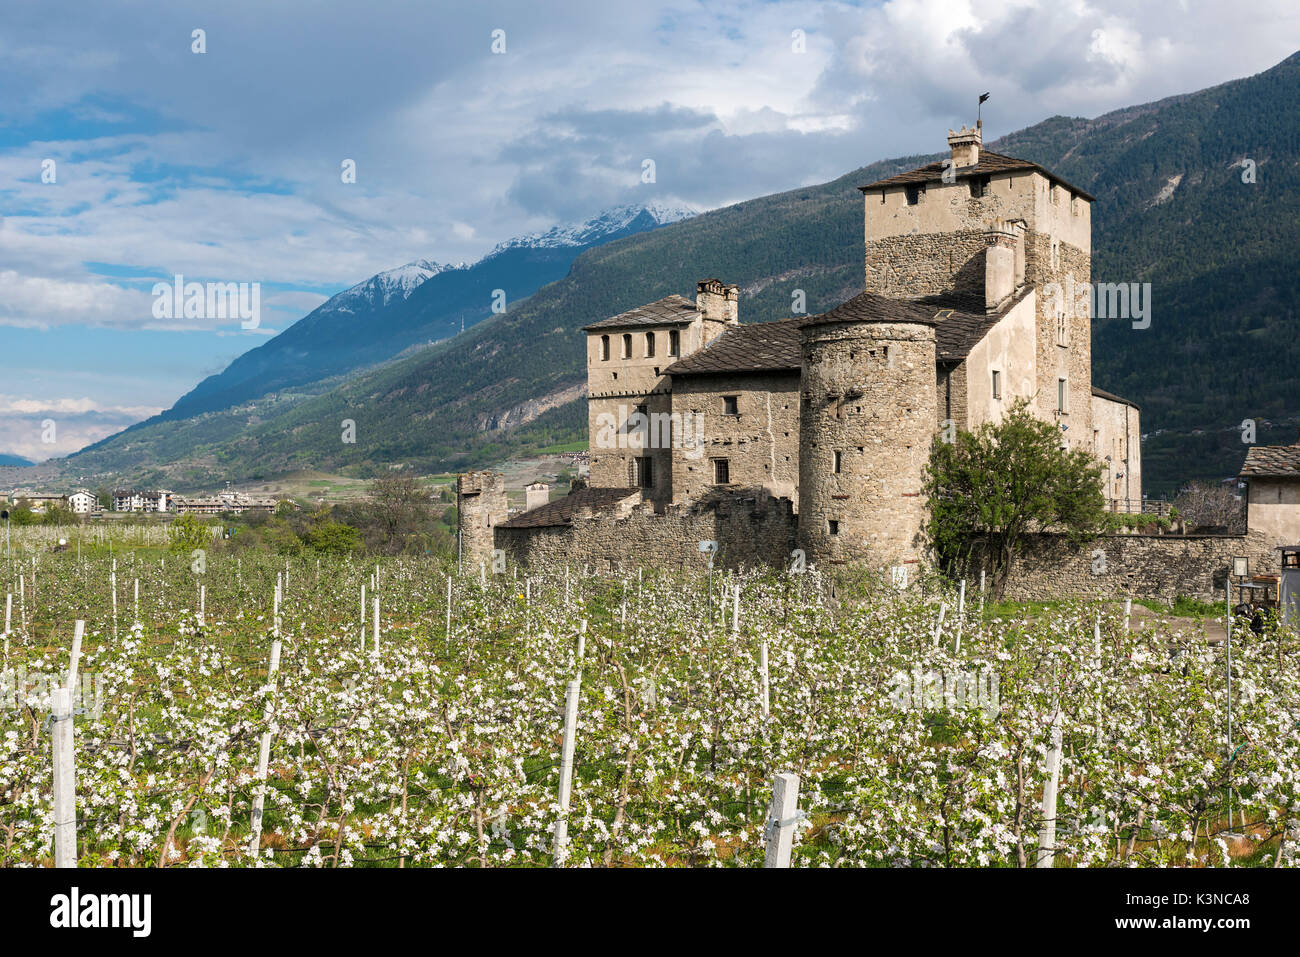 Castle of Sarriod de la Tour in spring. Saint-Pierre, province of Aosta, Aosta Valley, Italy Stock Photo